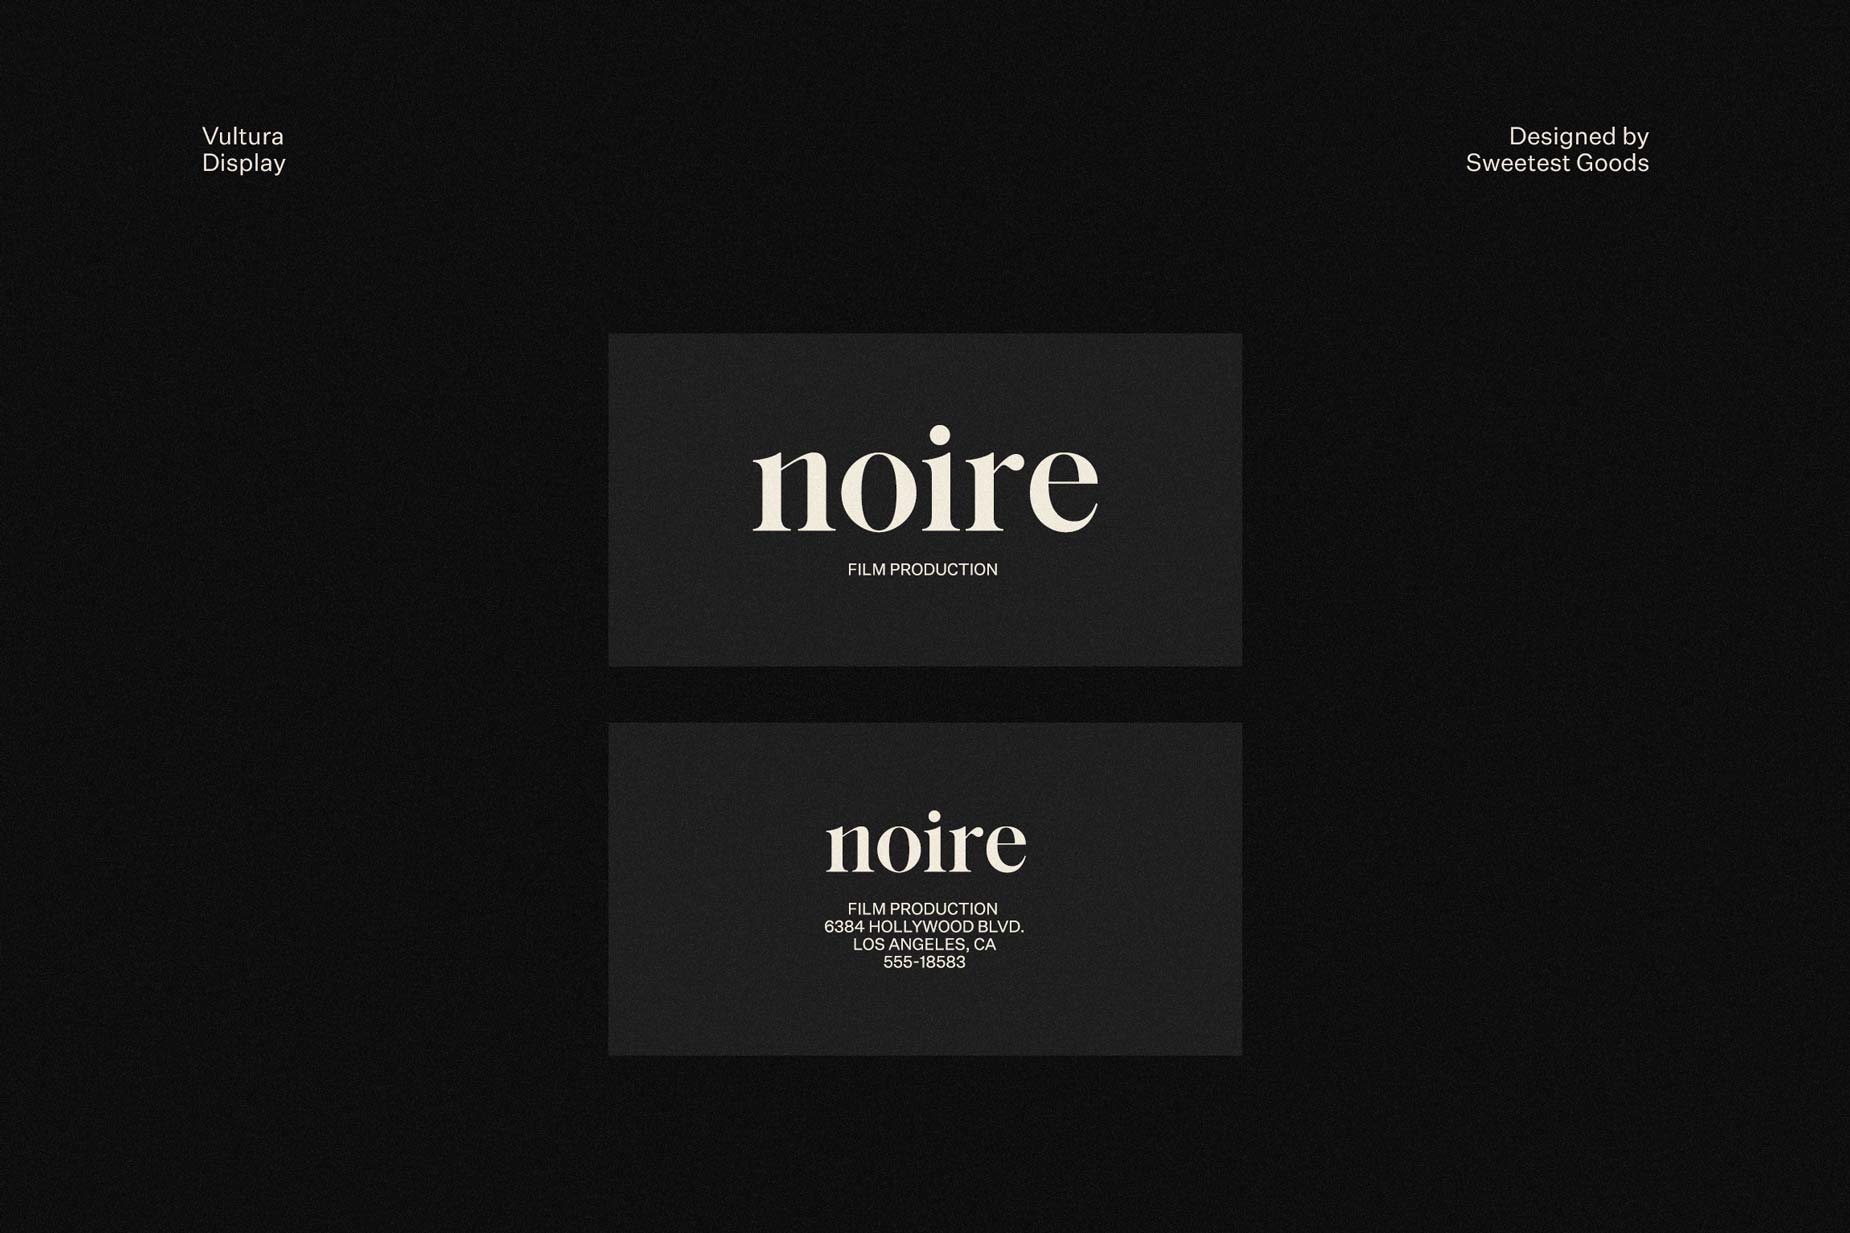 Business Card Design - All-Black - Noire - Vultura Typeface Design